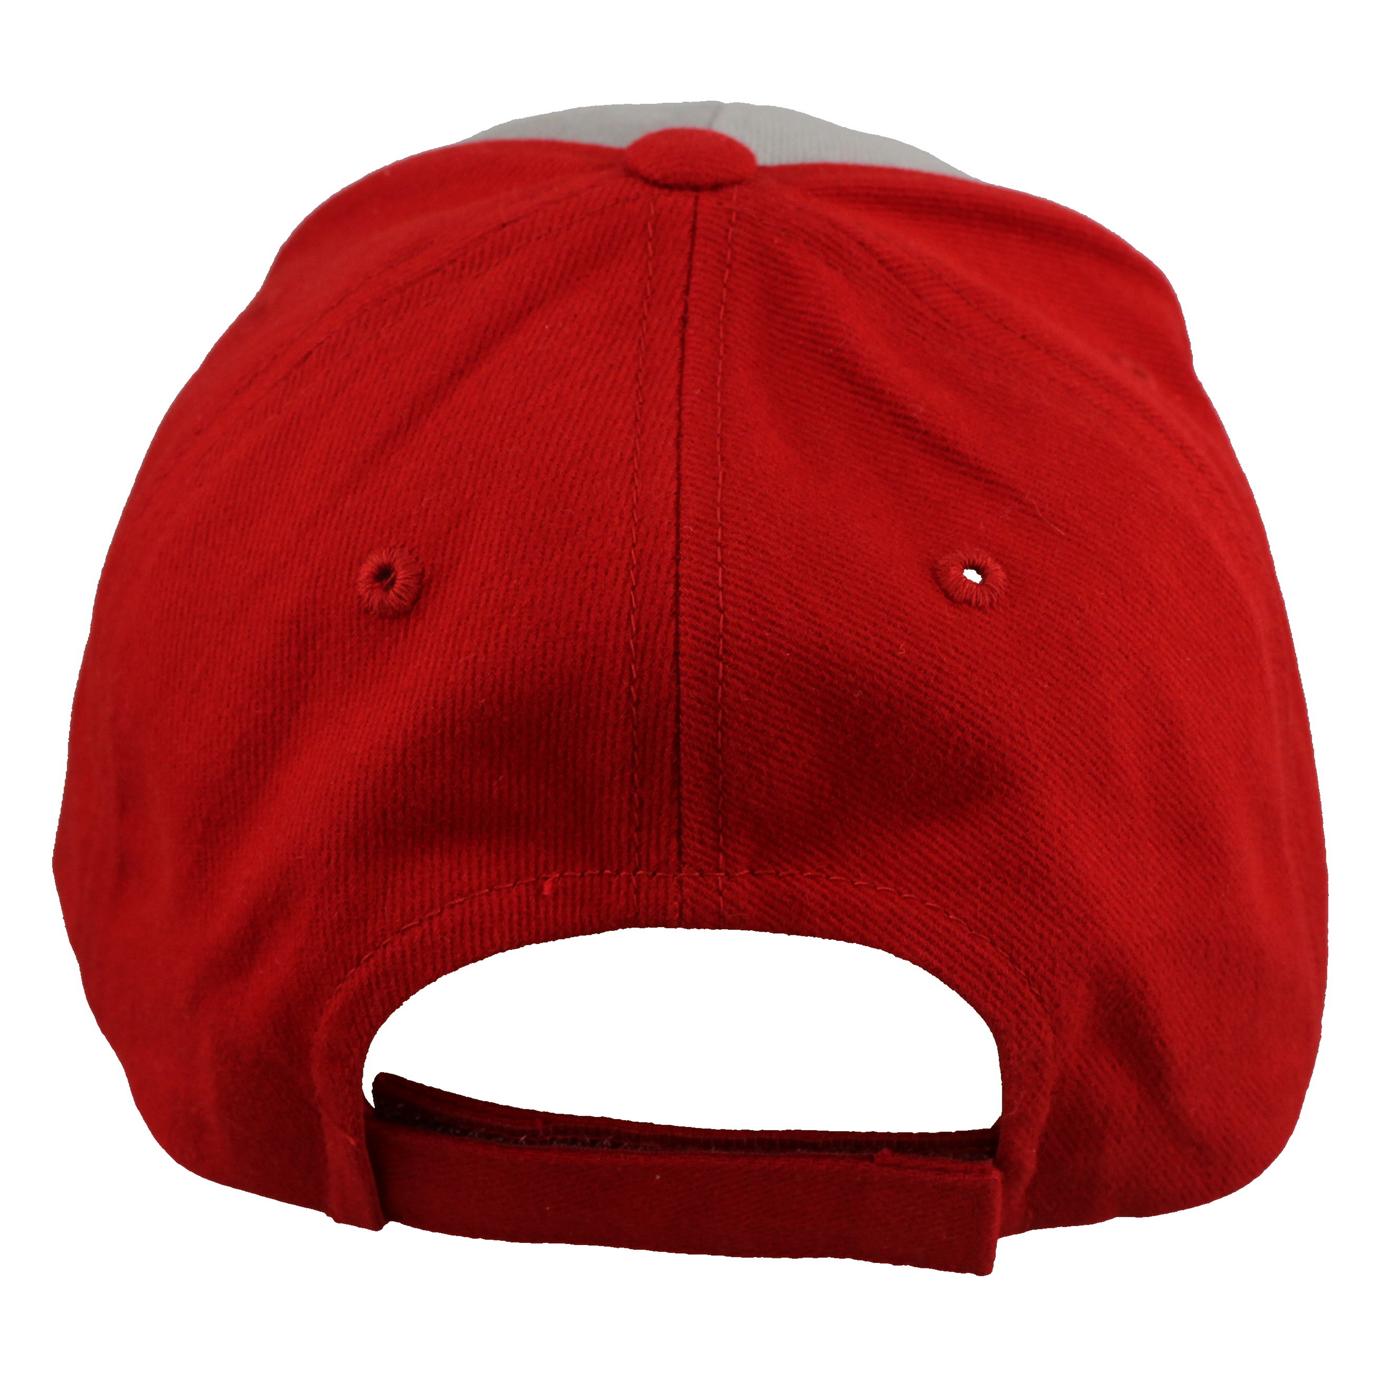 Texas Tech 100% Cotton Adjustable Baseball Cap - Gray/Red; image 2 of 2